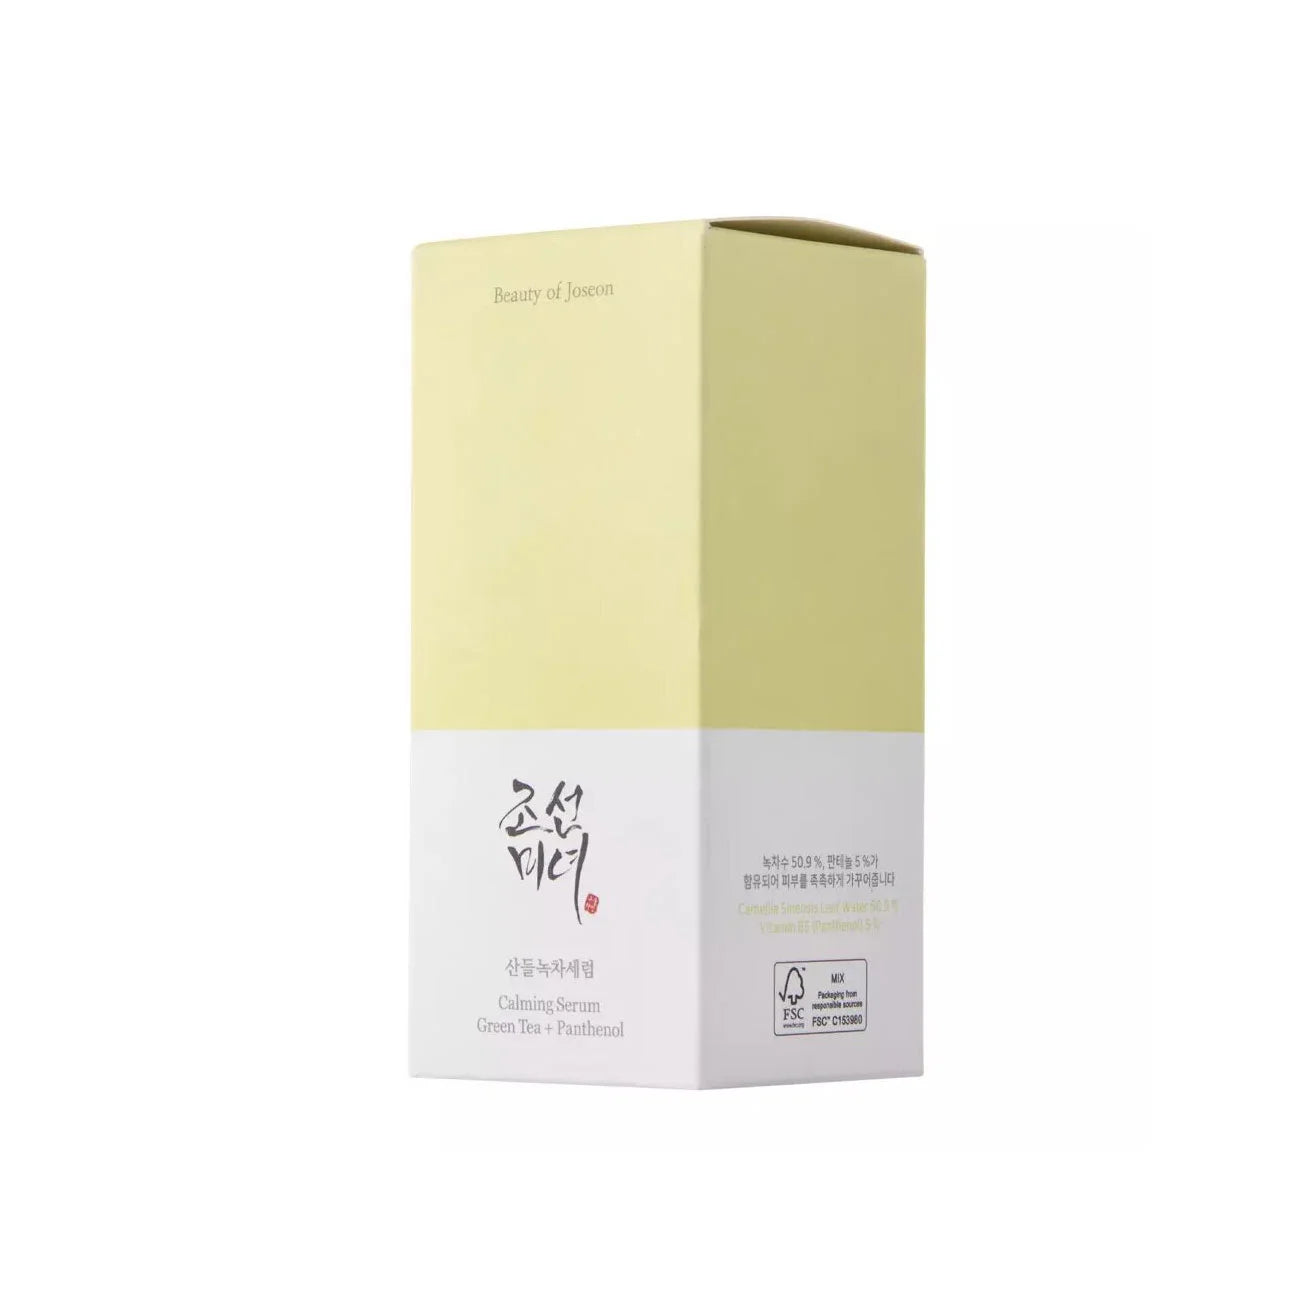 Beauty Of Joseon Calming Serum Green Tea + Panthenol dry sensitive irritated redden skin eczema rosacea acne pimples K Beauty World 